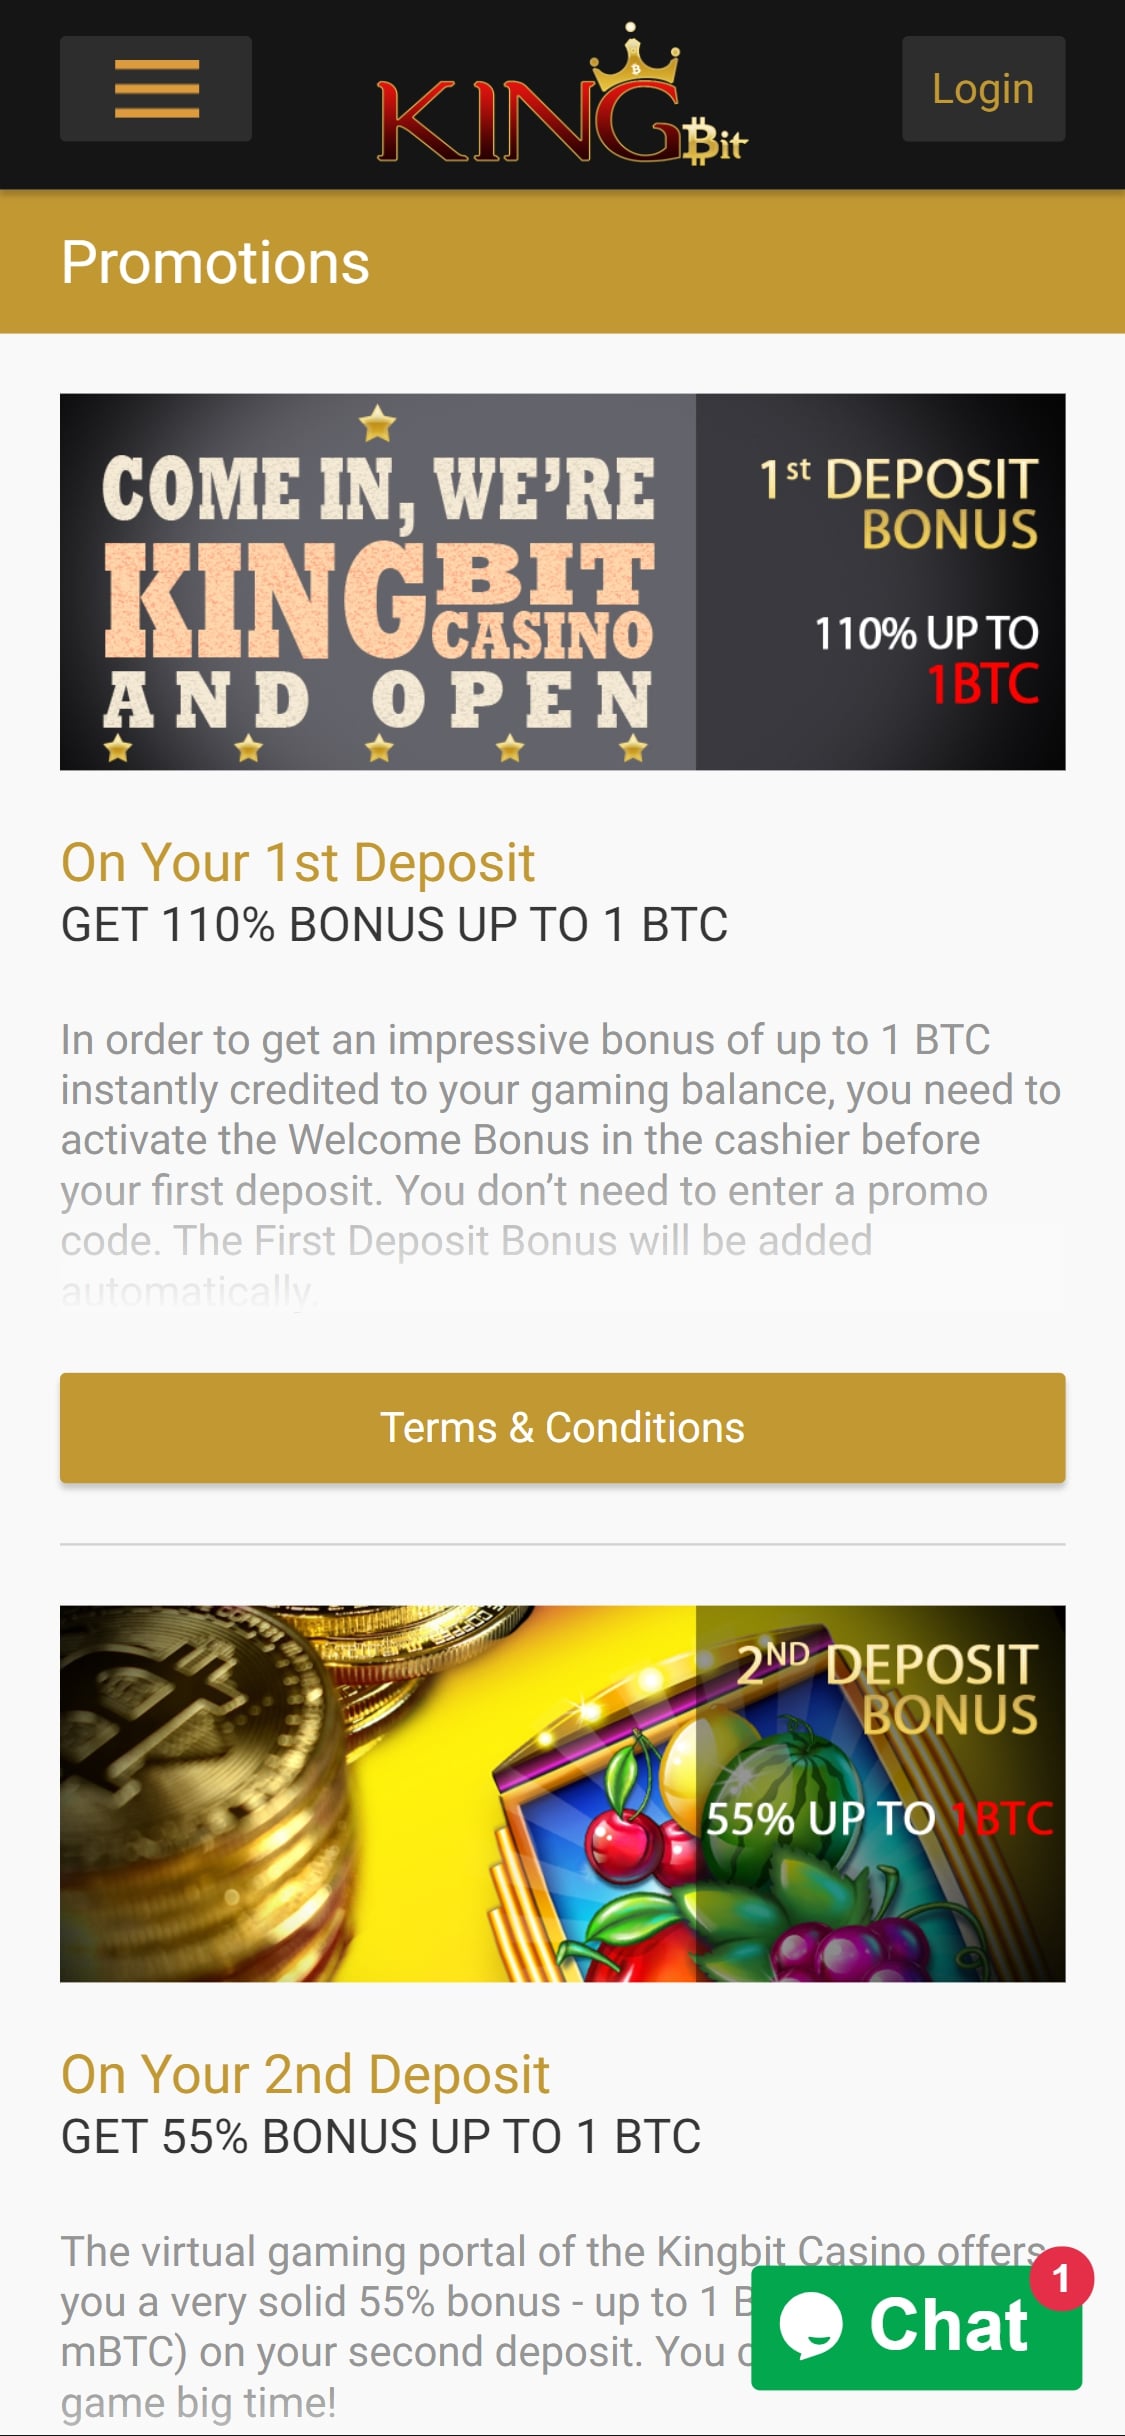 KingBit Casino Mobile No Deposit Bonus Review